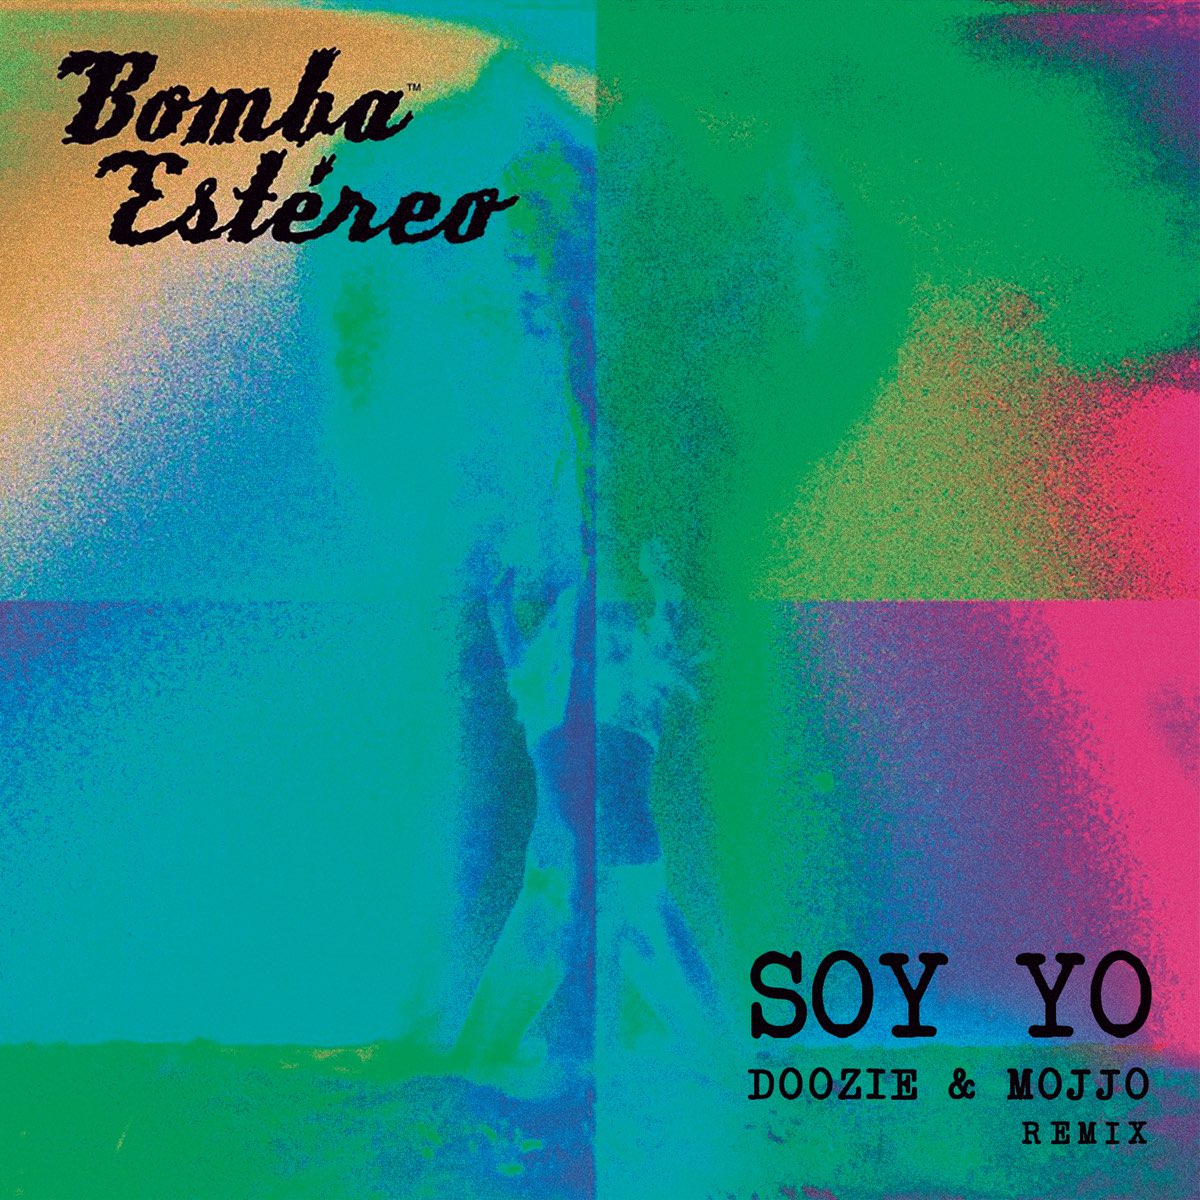 Soy Yo (Doozie & MOJJO Remix) [feat. Doozie & MOJJO] - Single by Bomba  Estéreo on Apple Music